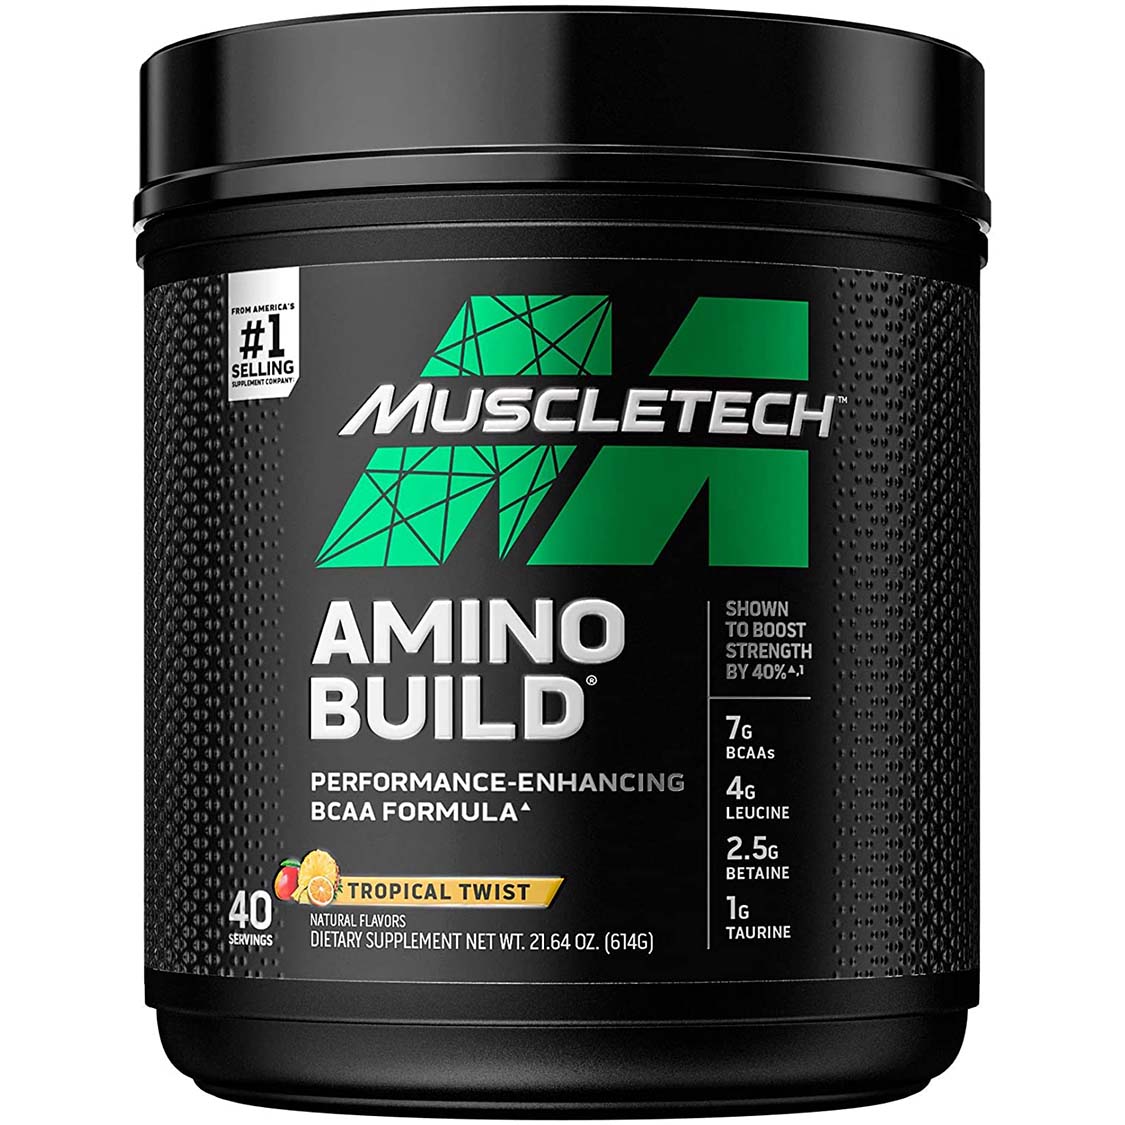 Muscletech Amino Build 40 Tropical Twist